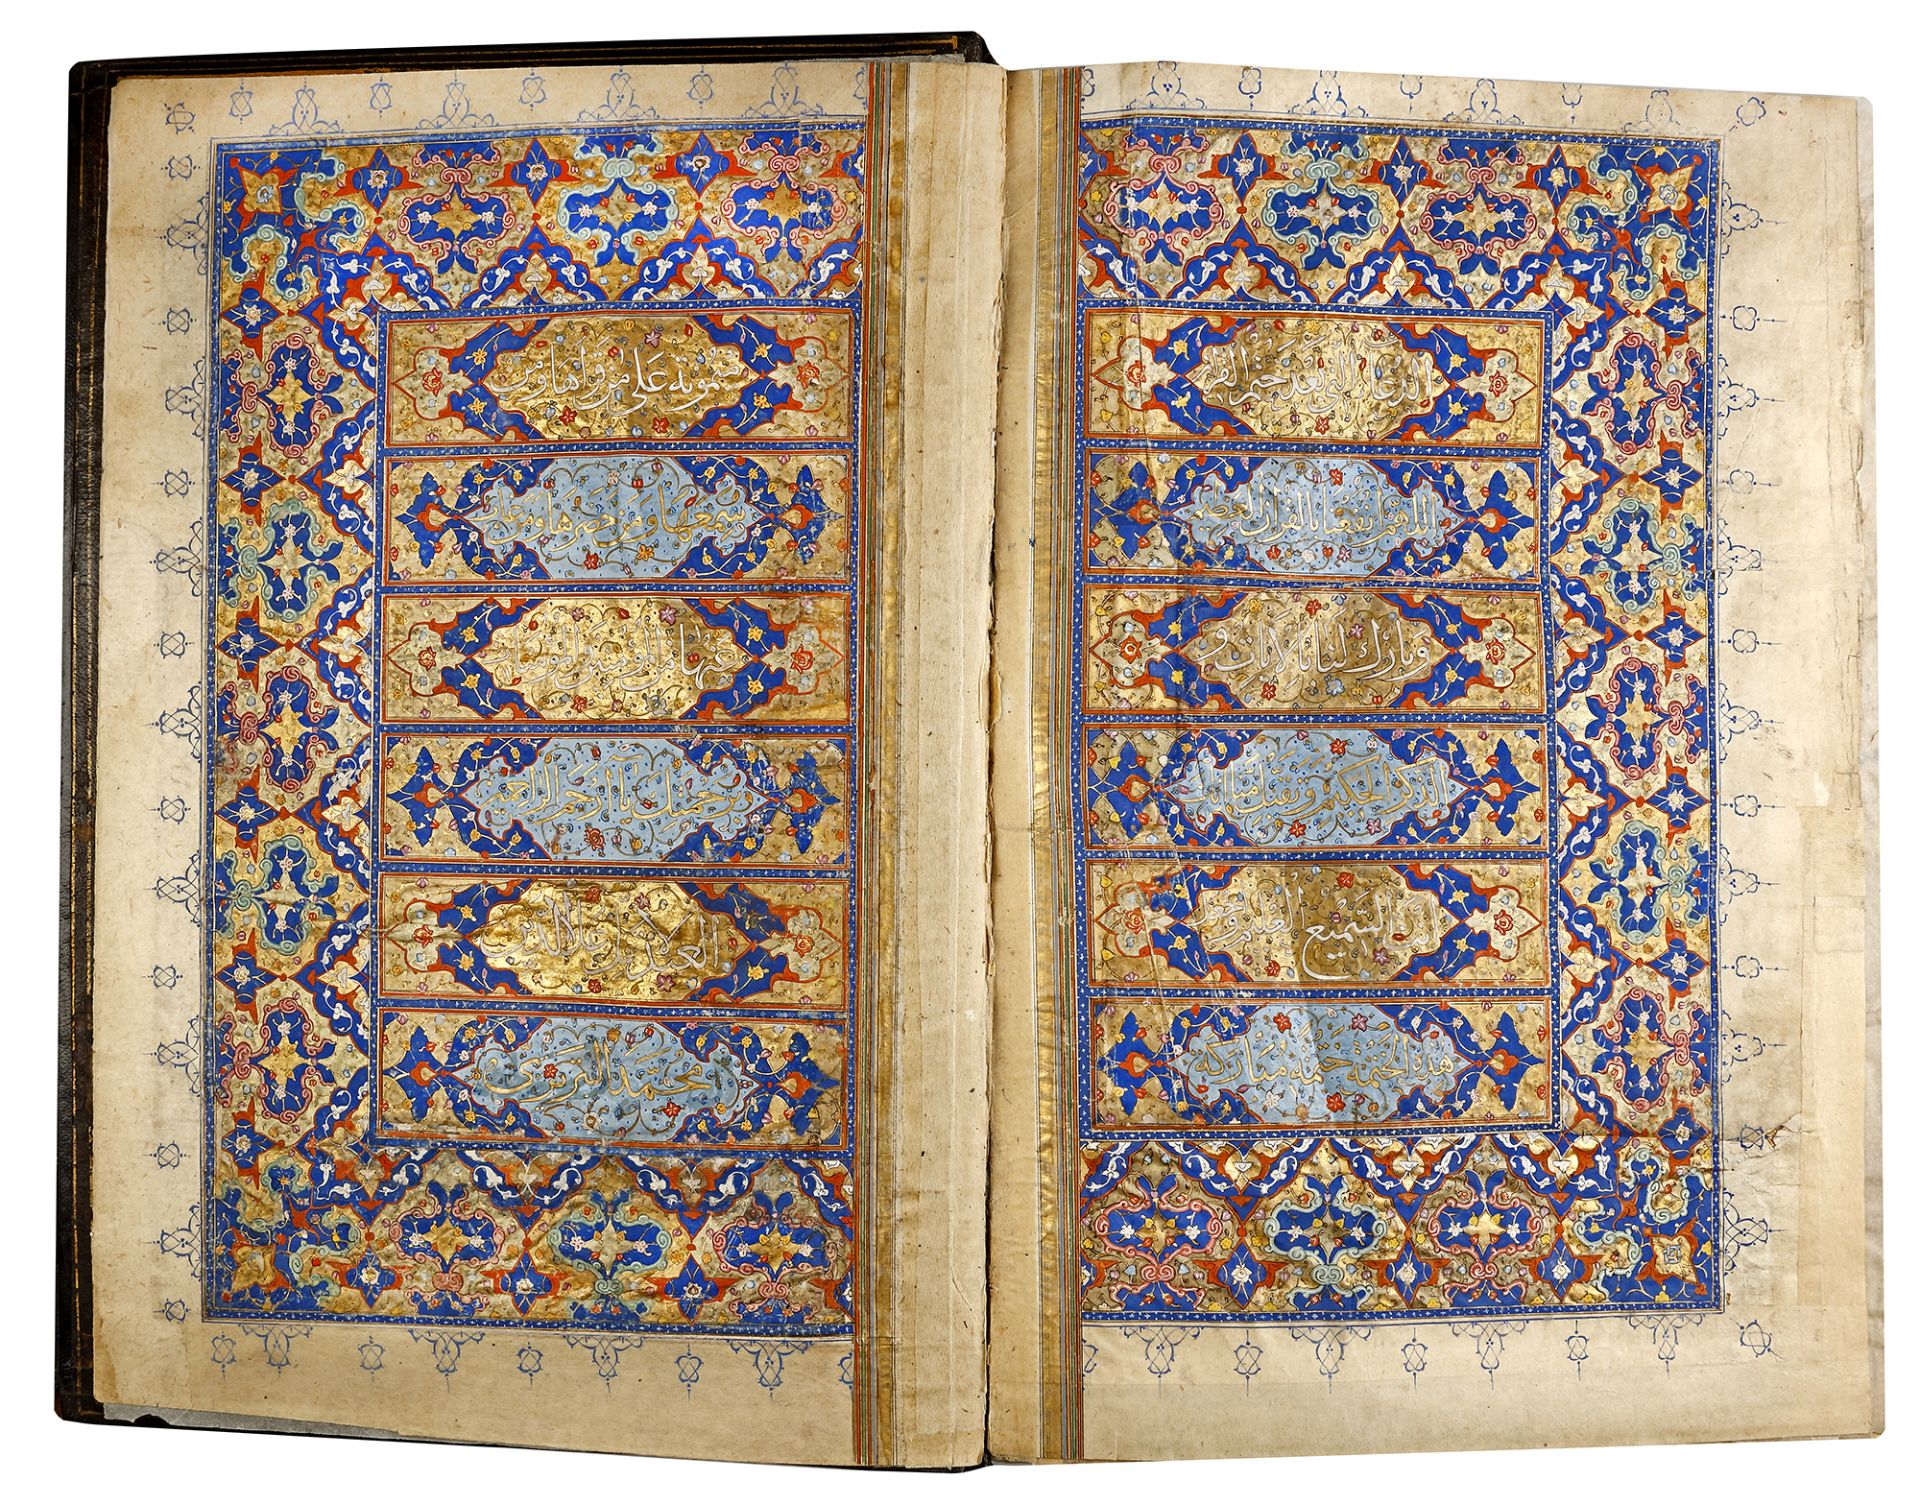 A LARGE ILLUMINATED QURAN, COPIED BY 'ALA'-AL-DIN MUHAMMAD AL-TABRIZI SAFAVID, PERSIA, 16TH CENT - Image 23 of 26